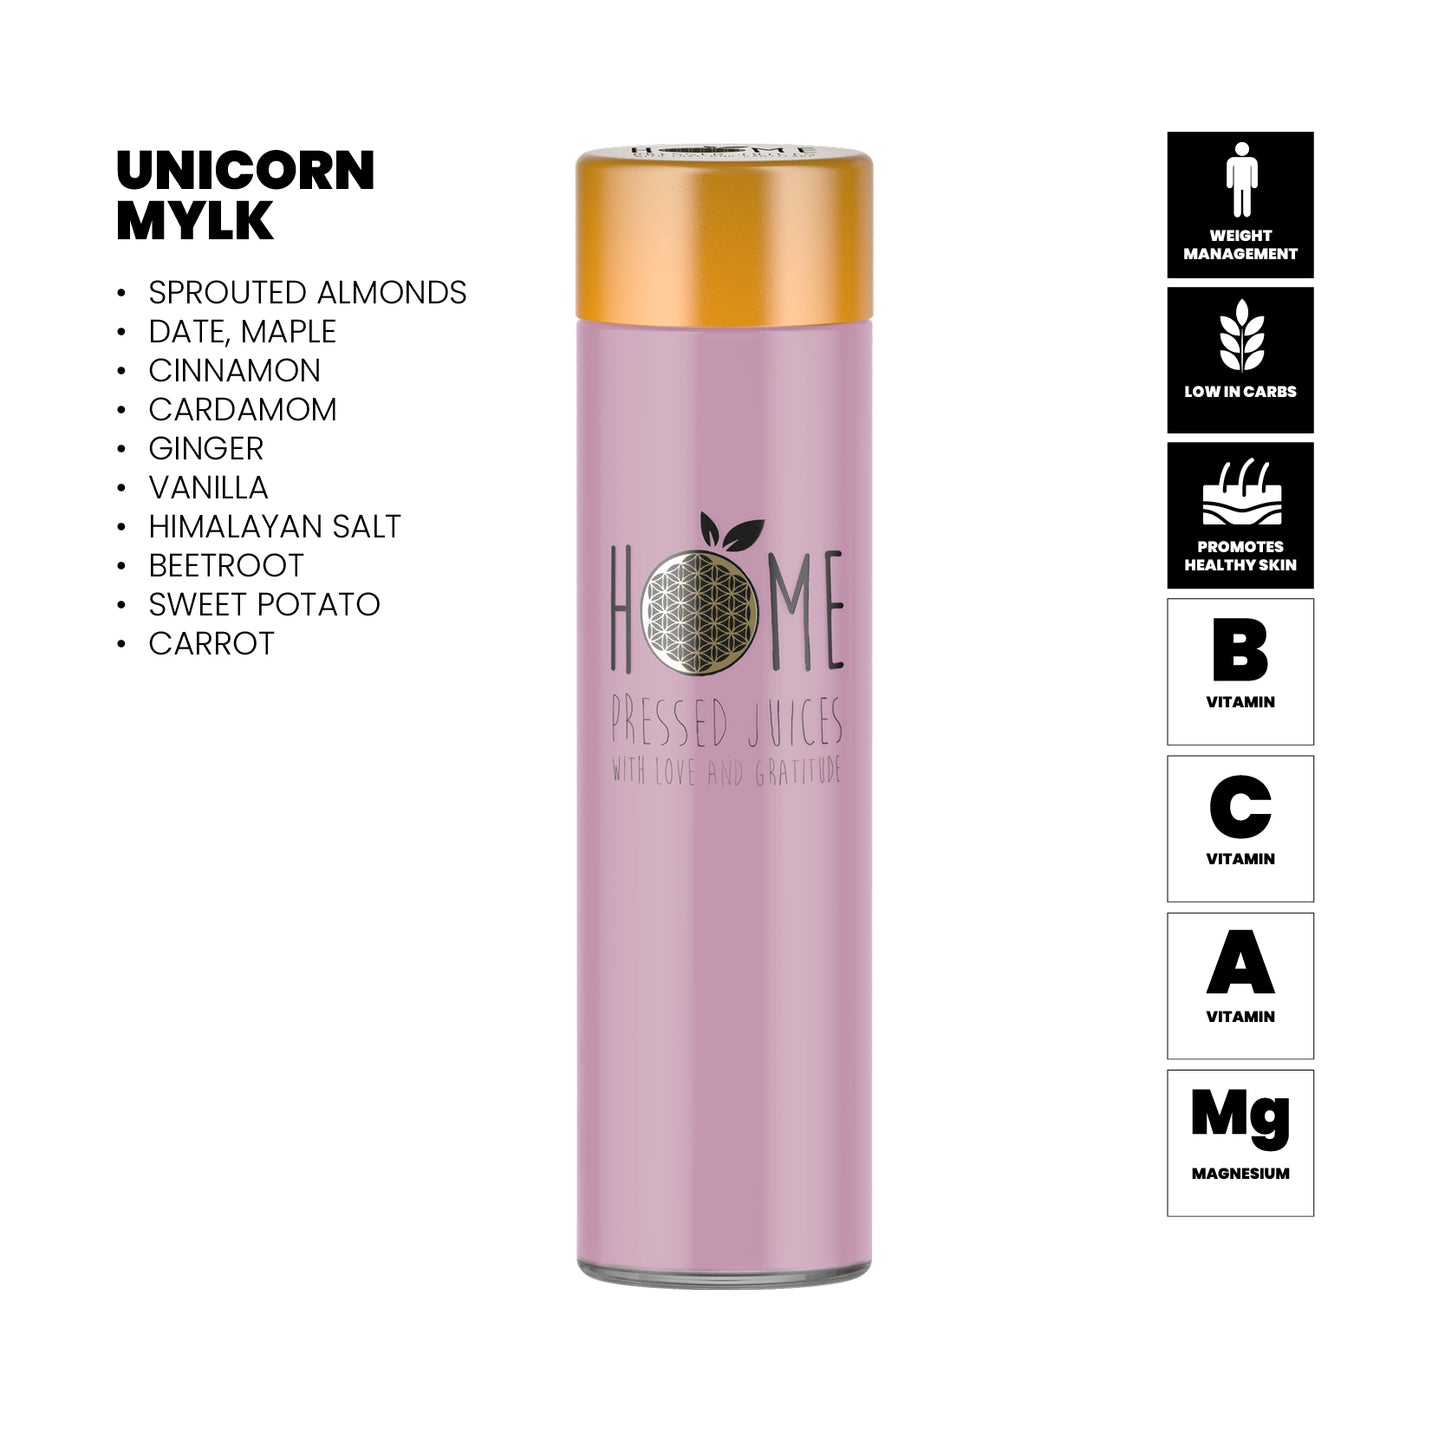 Unicorn Mylk - Home Juice